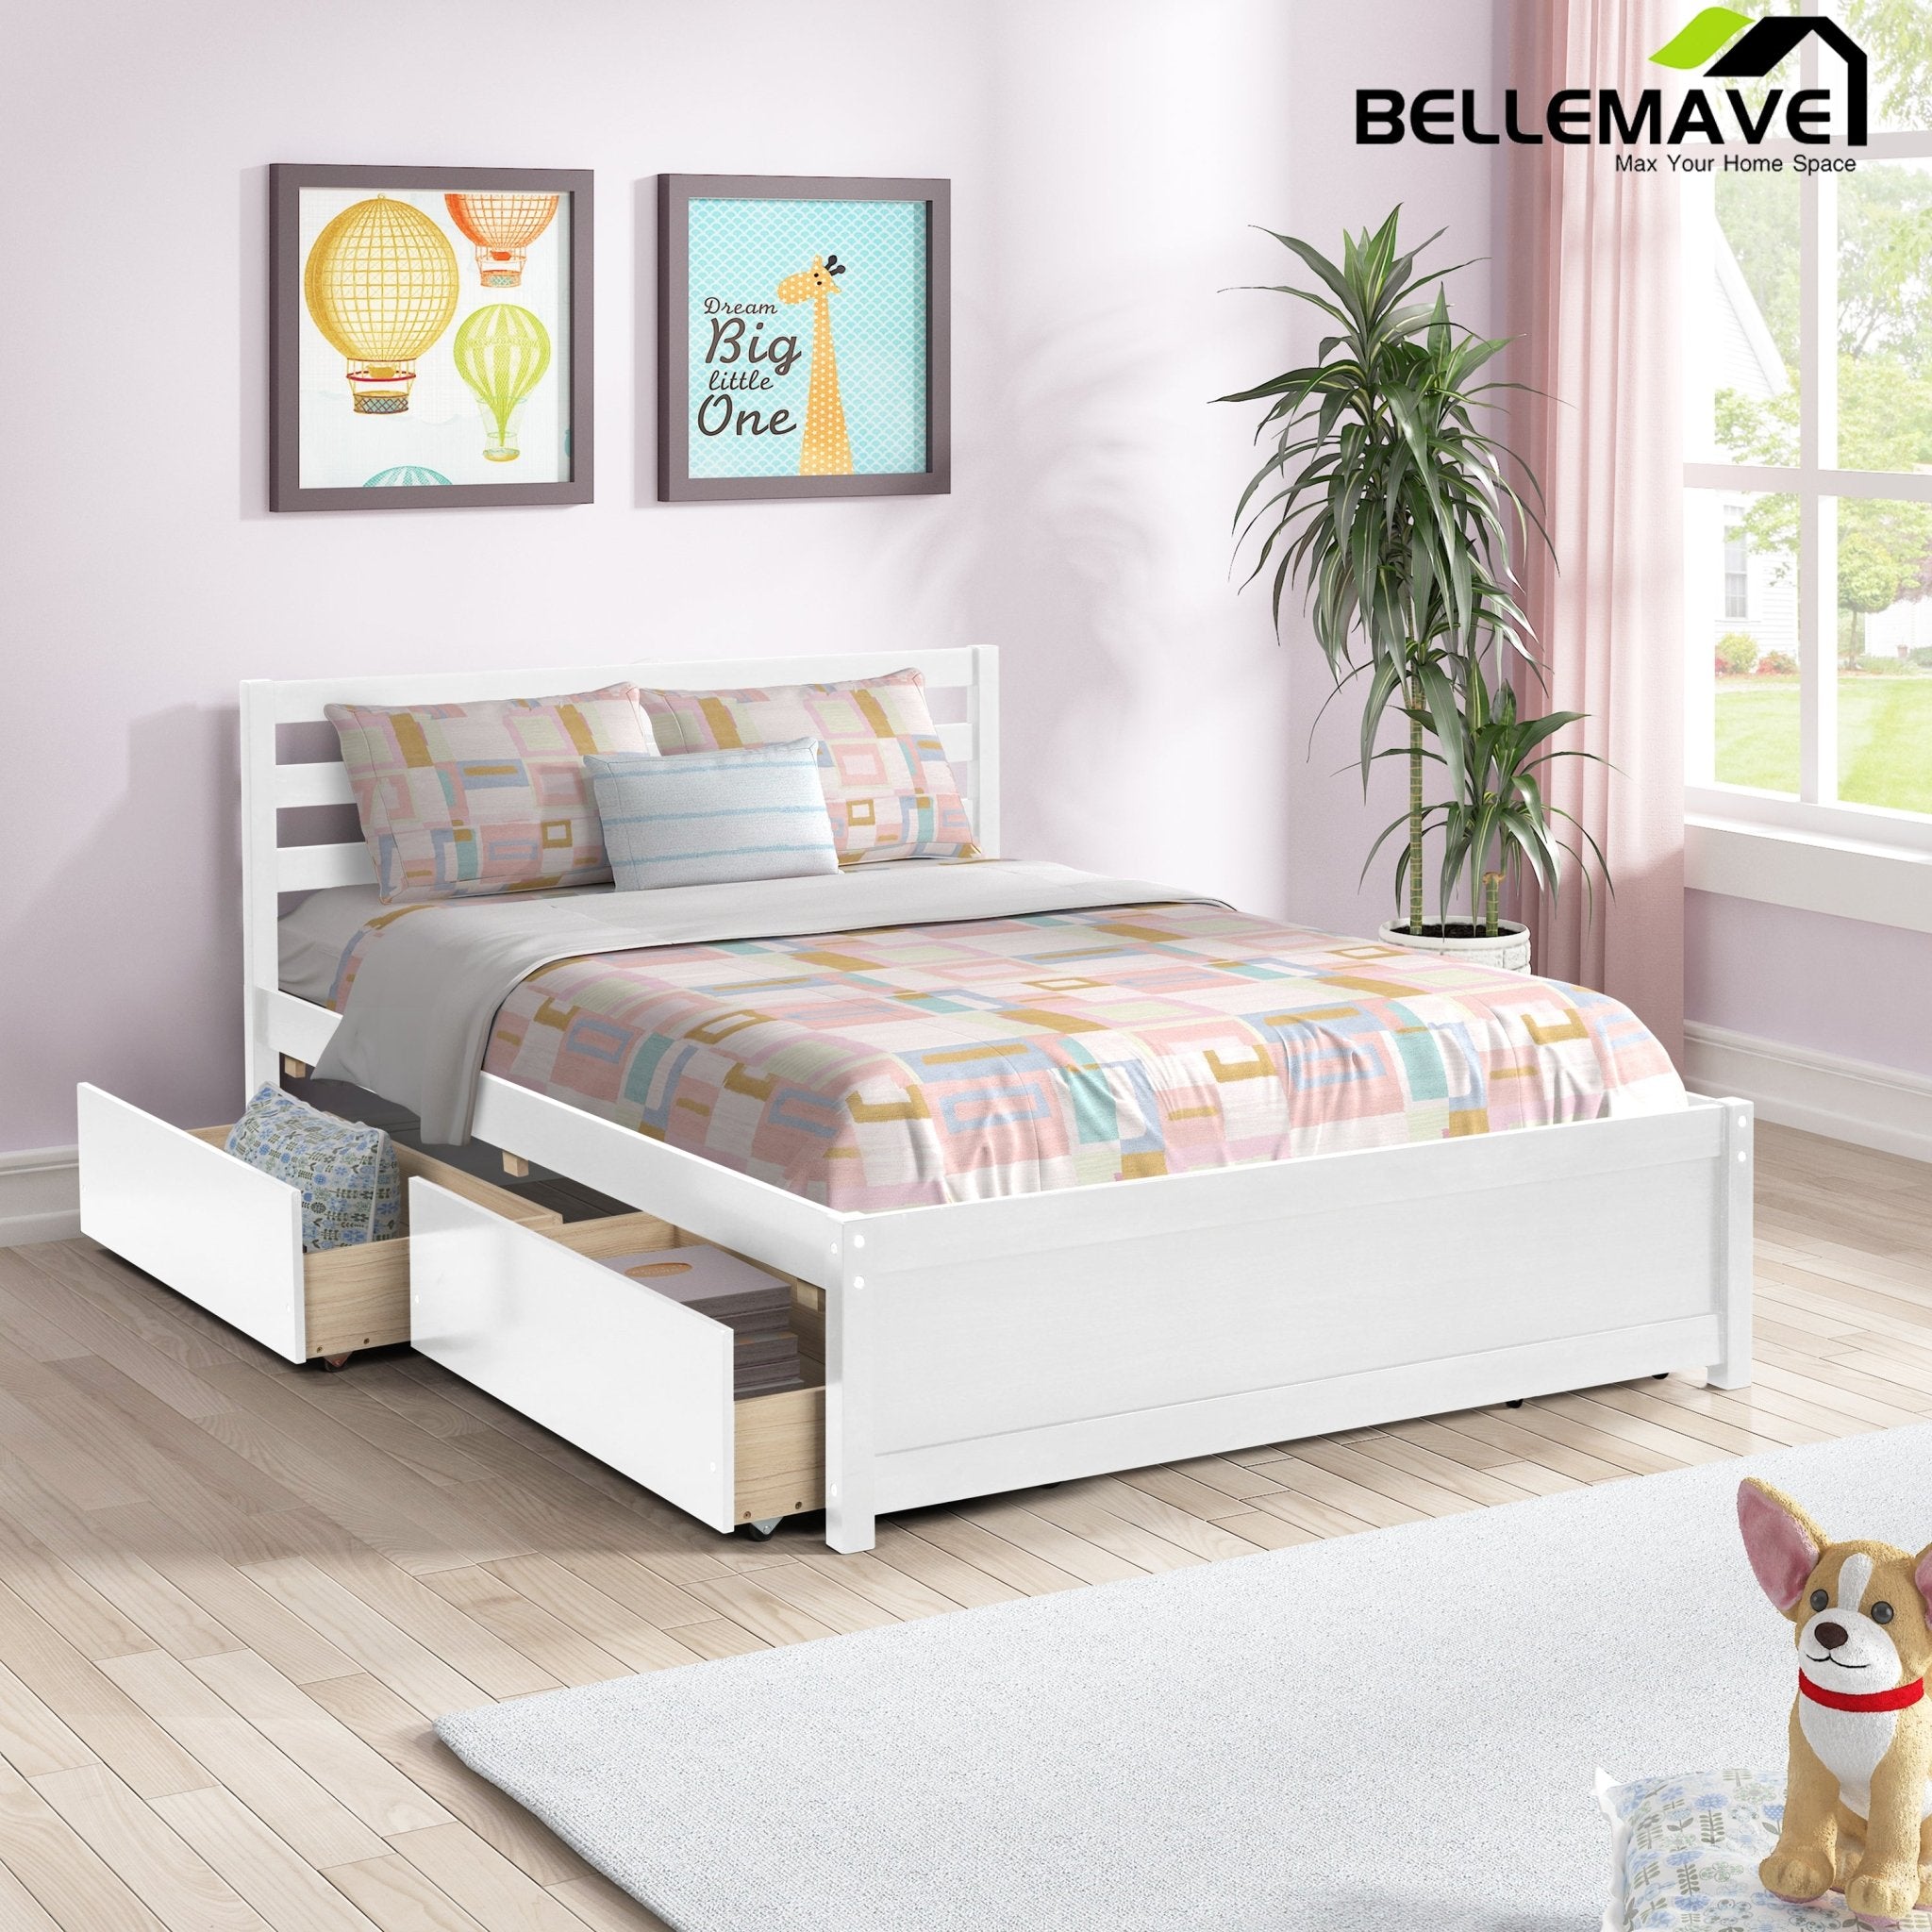 Bellemave Full Size Wood Platform Bed Frame w/Headboard and Four Drawers - Bellemave